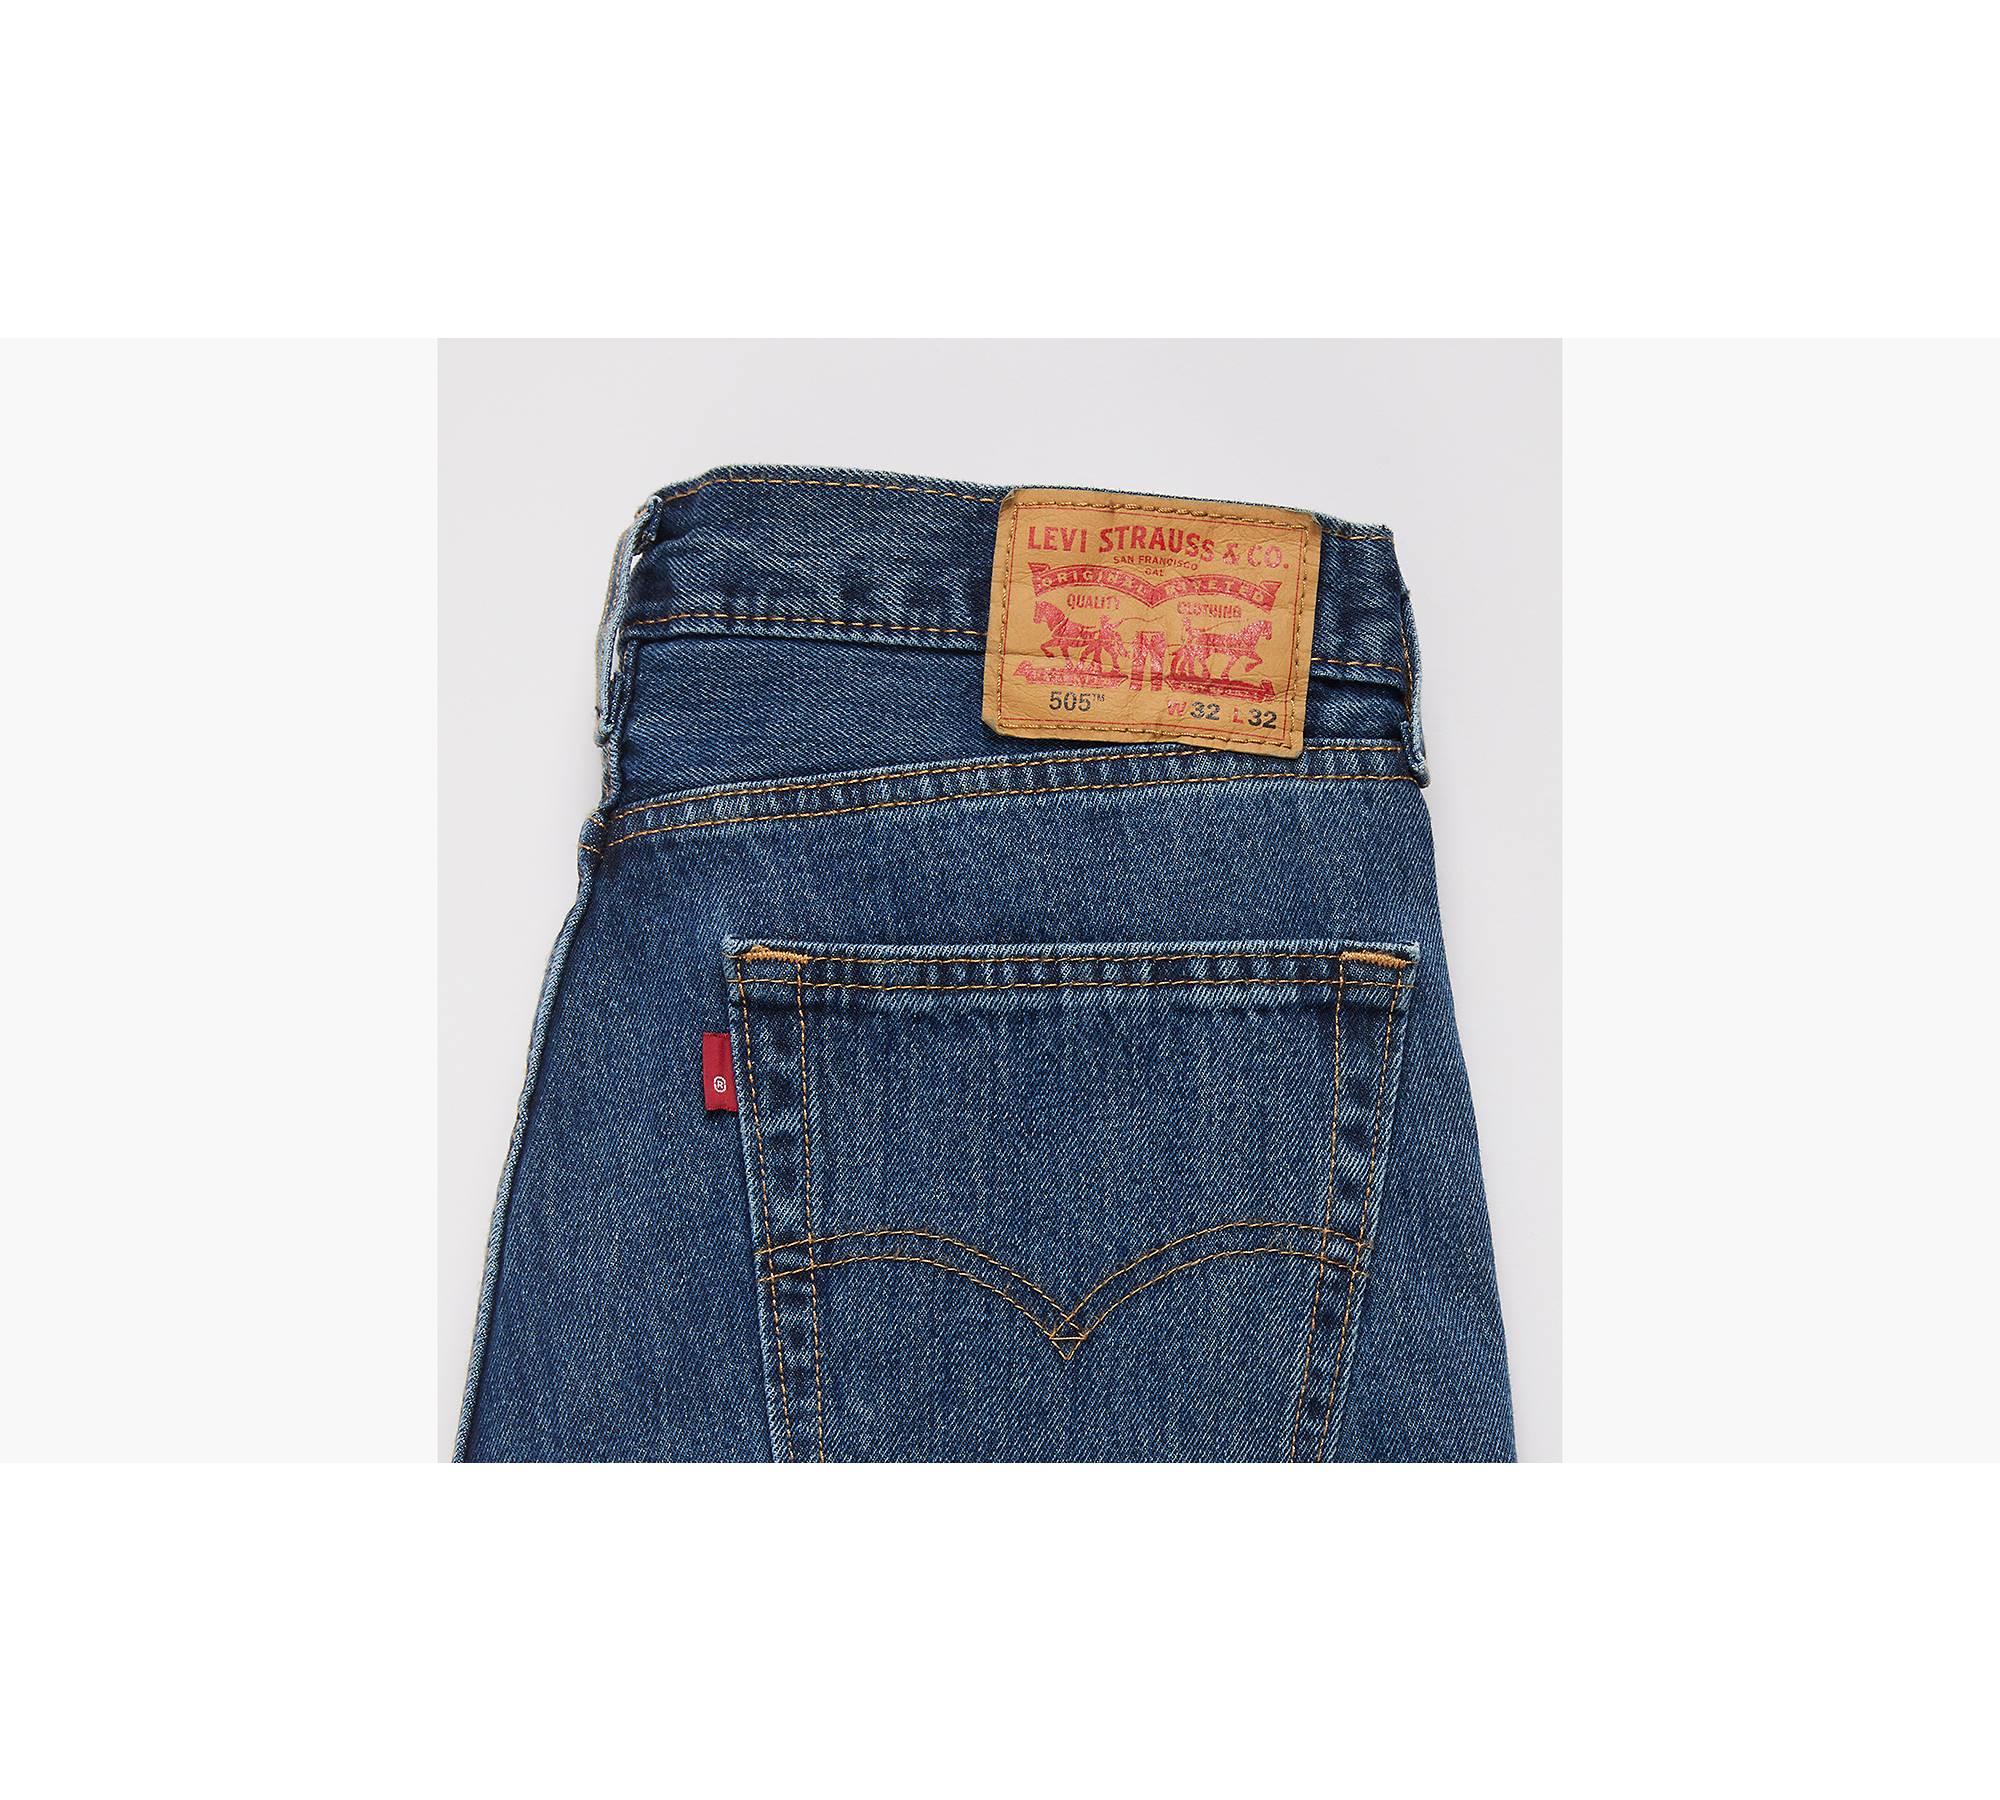 Levi's Men's 505 Regular Jeans - 00505-1502-30x30